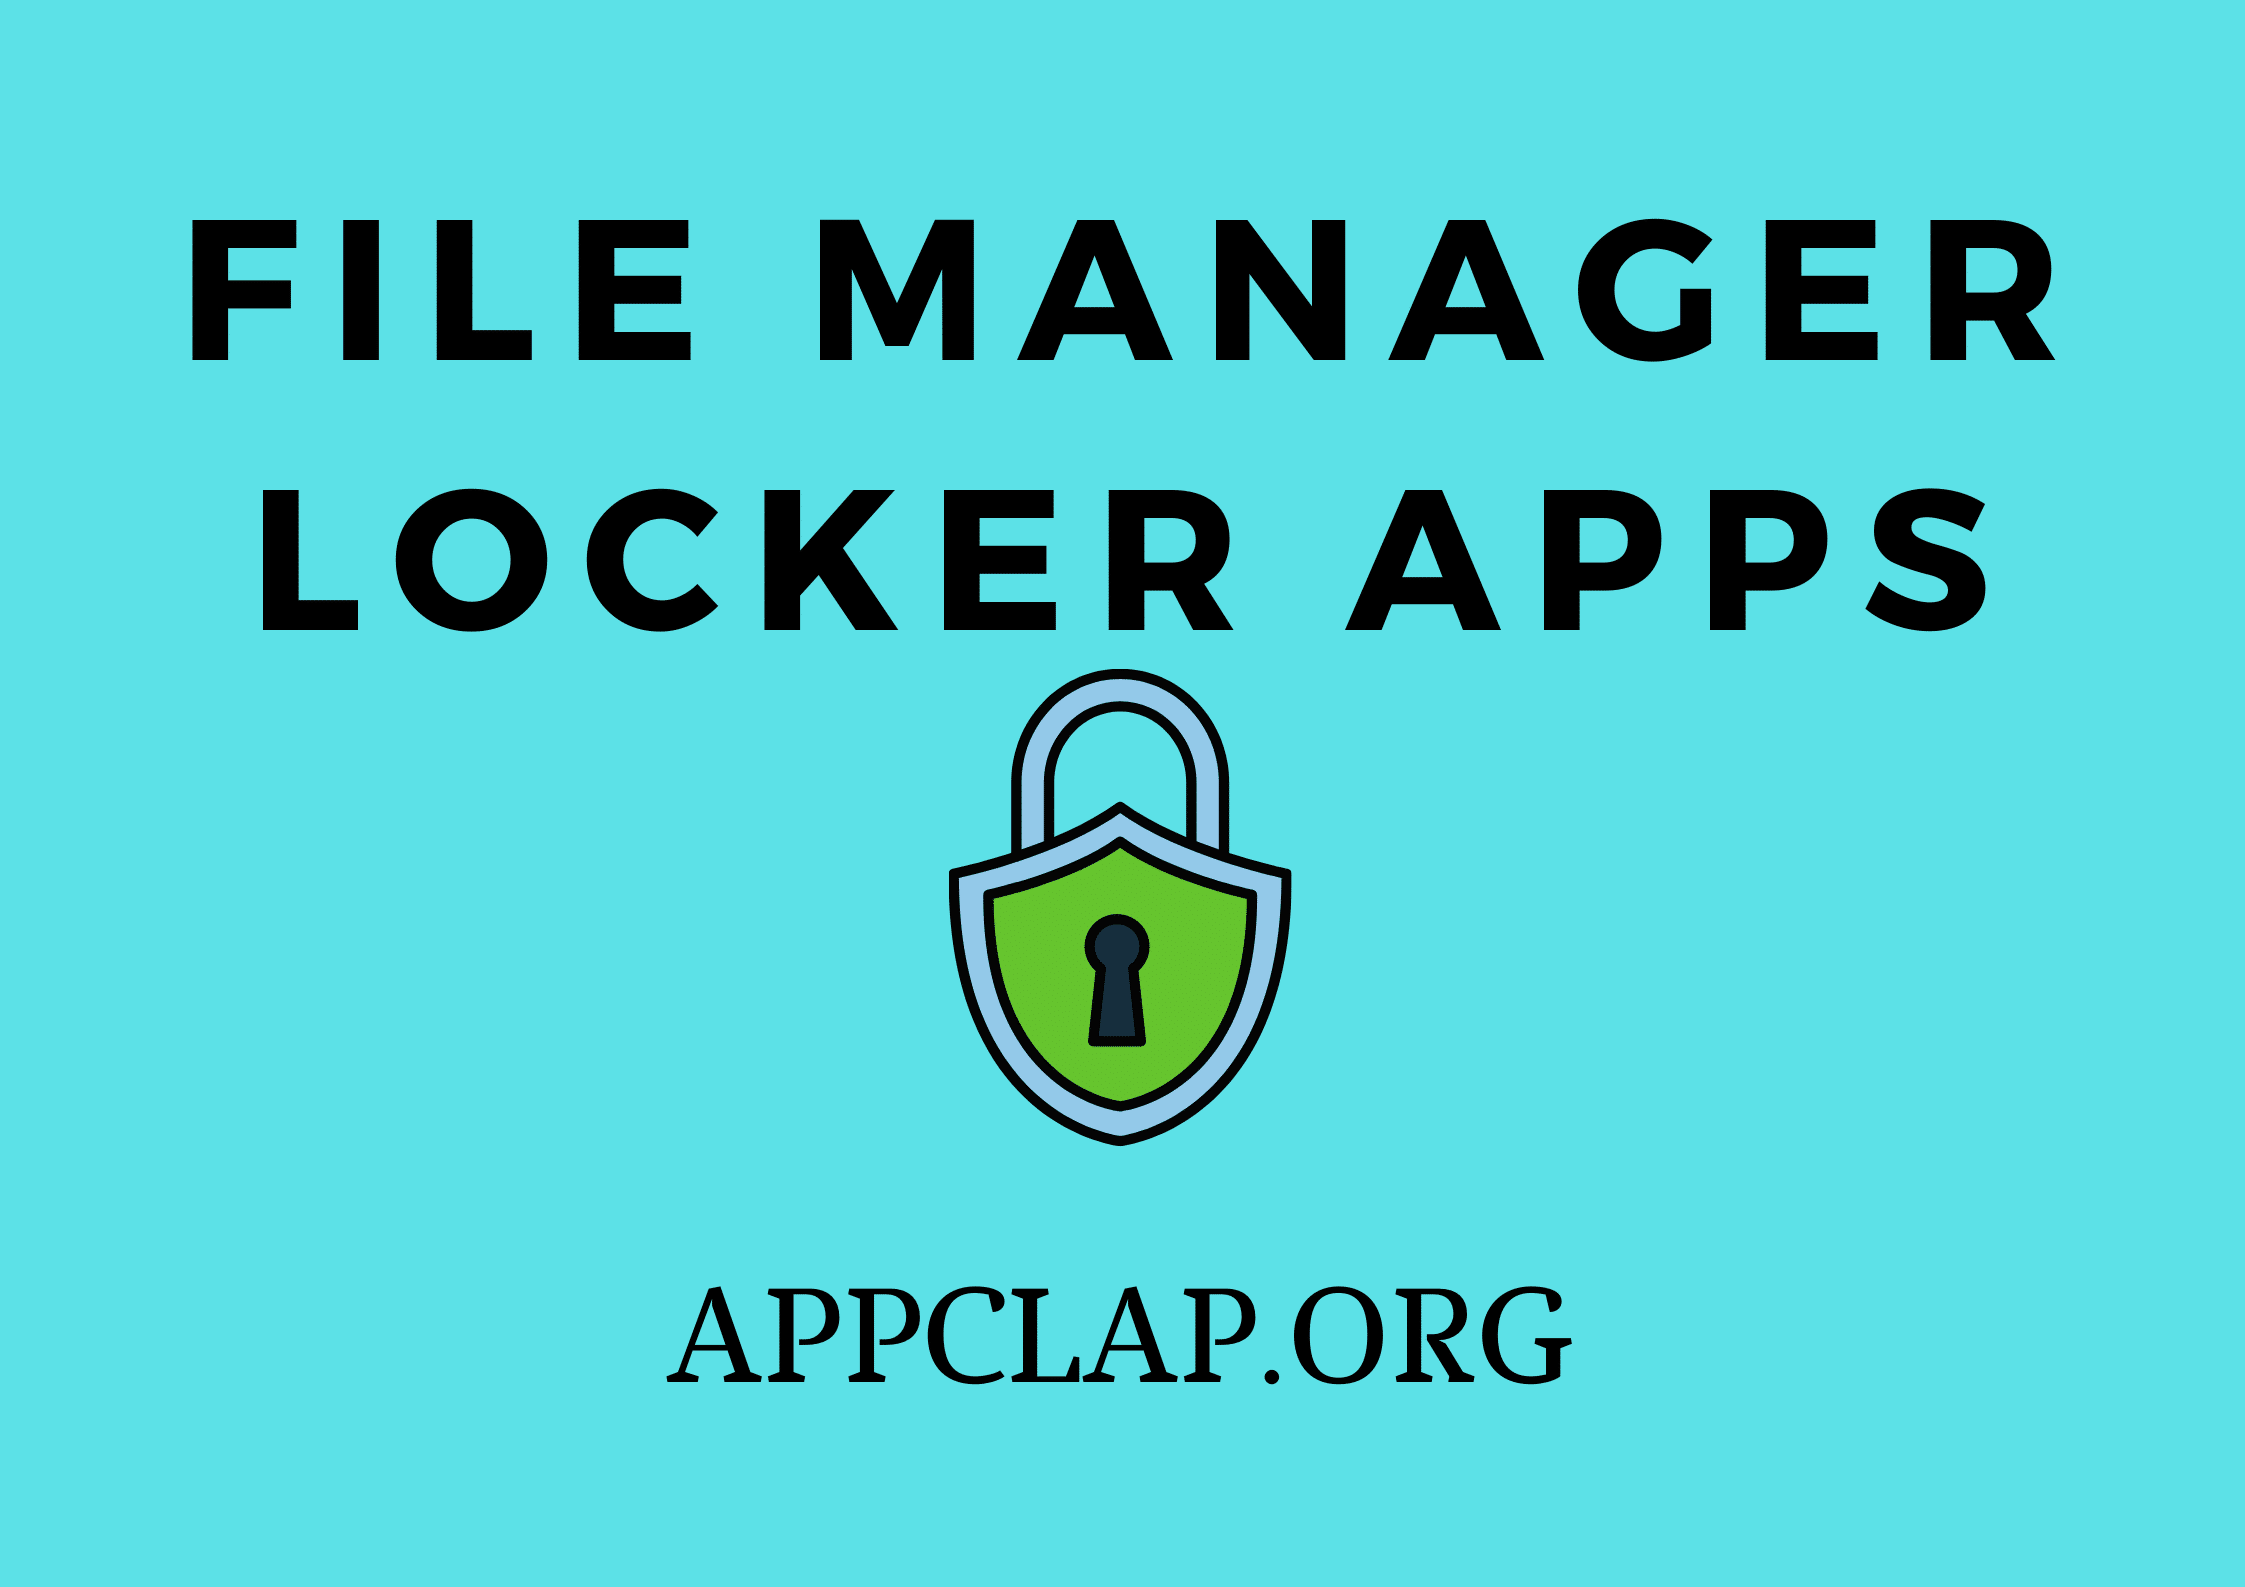 File Manager Locker Apps